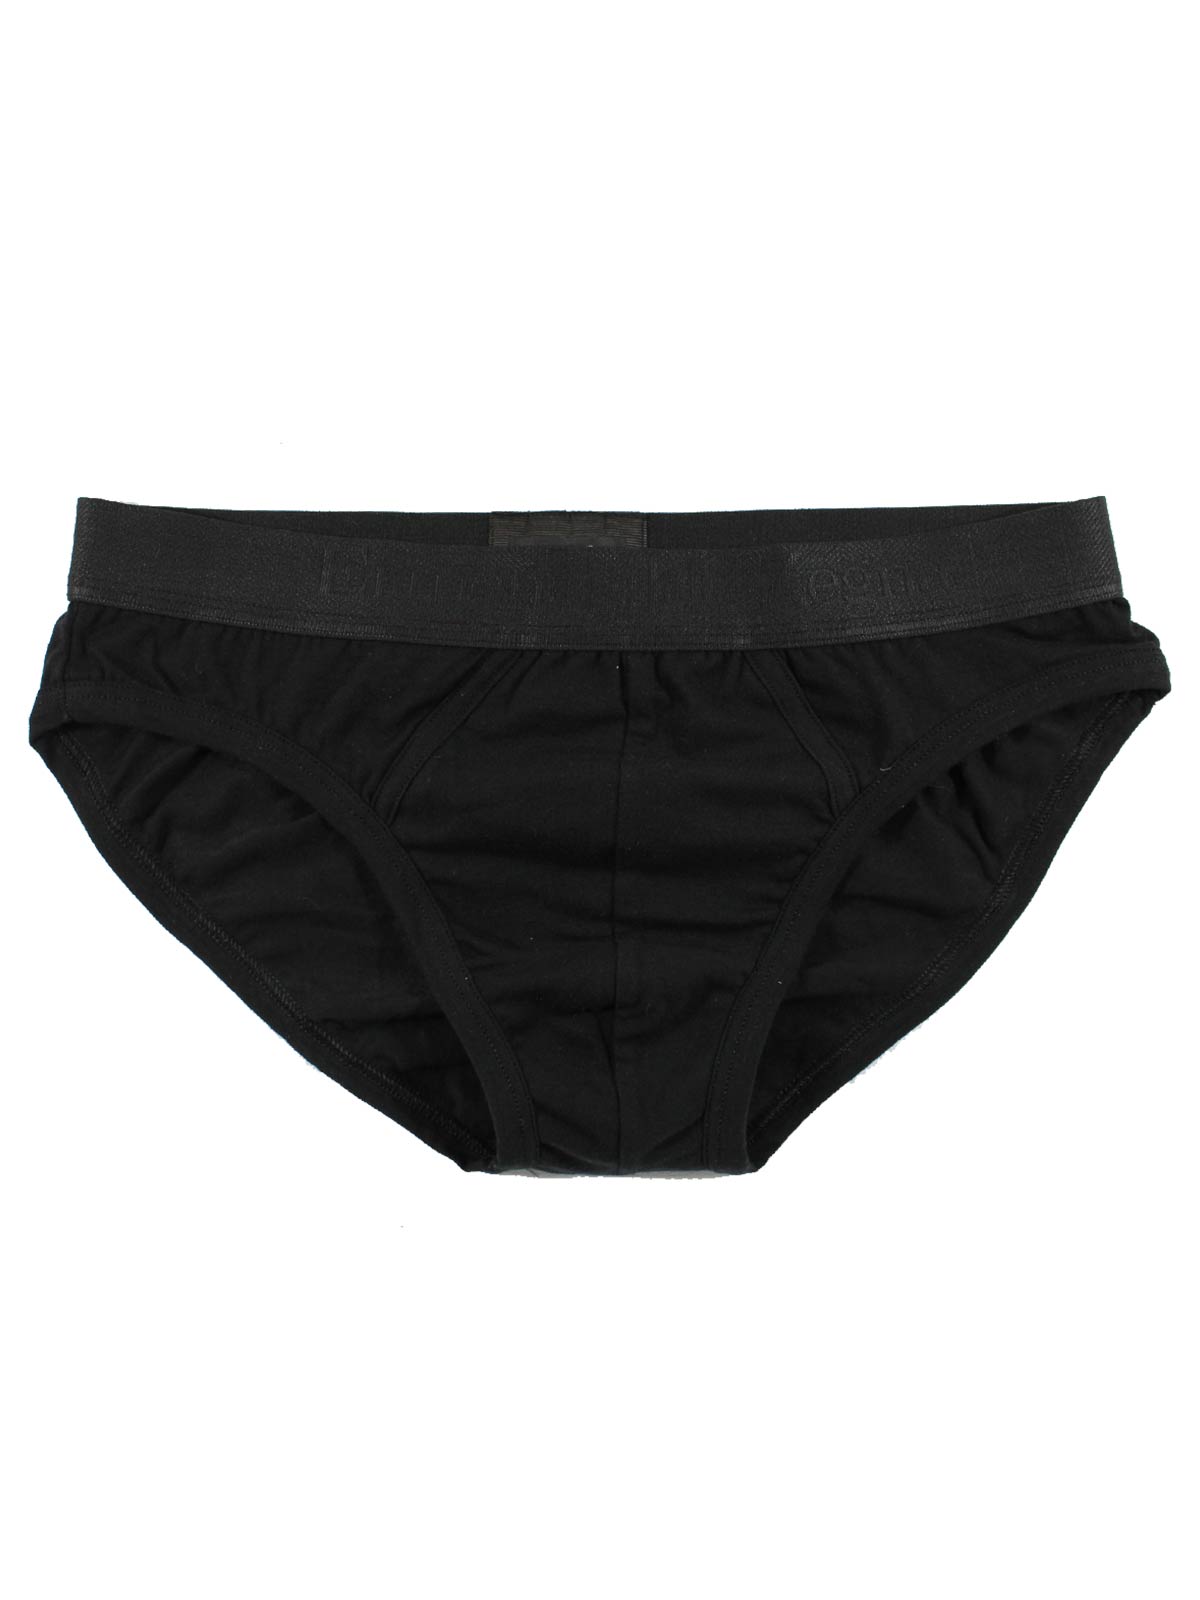 Ermenegildo Zegna Underwear Black Stretch L Cotton Midi Brief 2 Pack - Tie  Deals